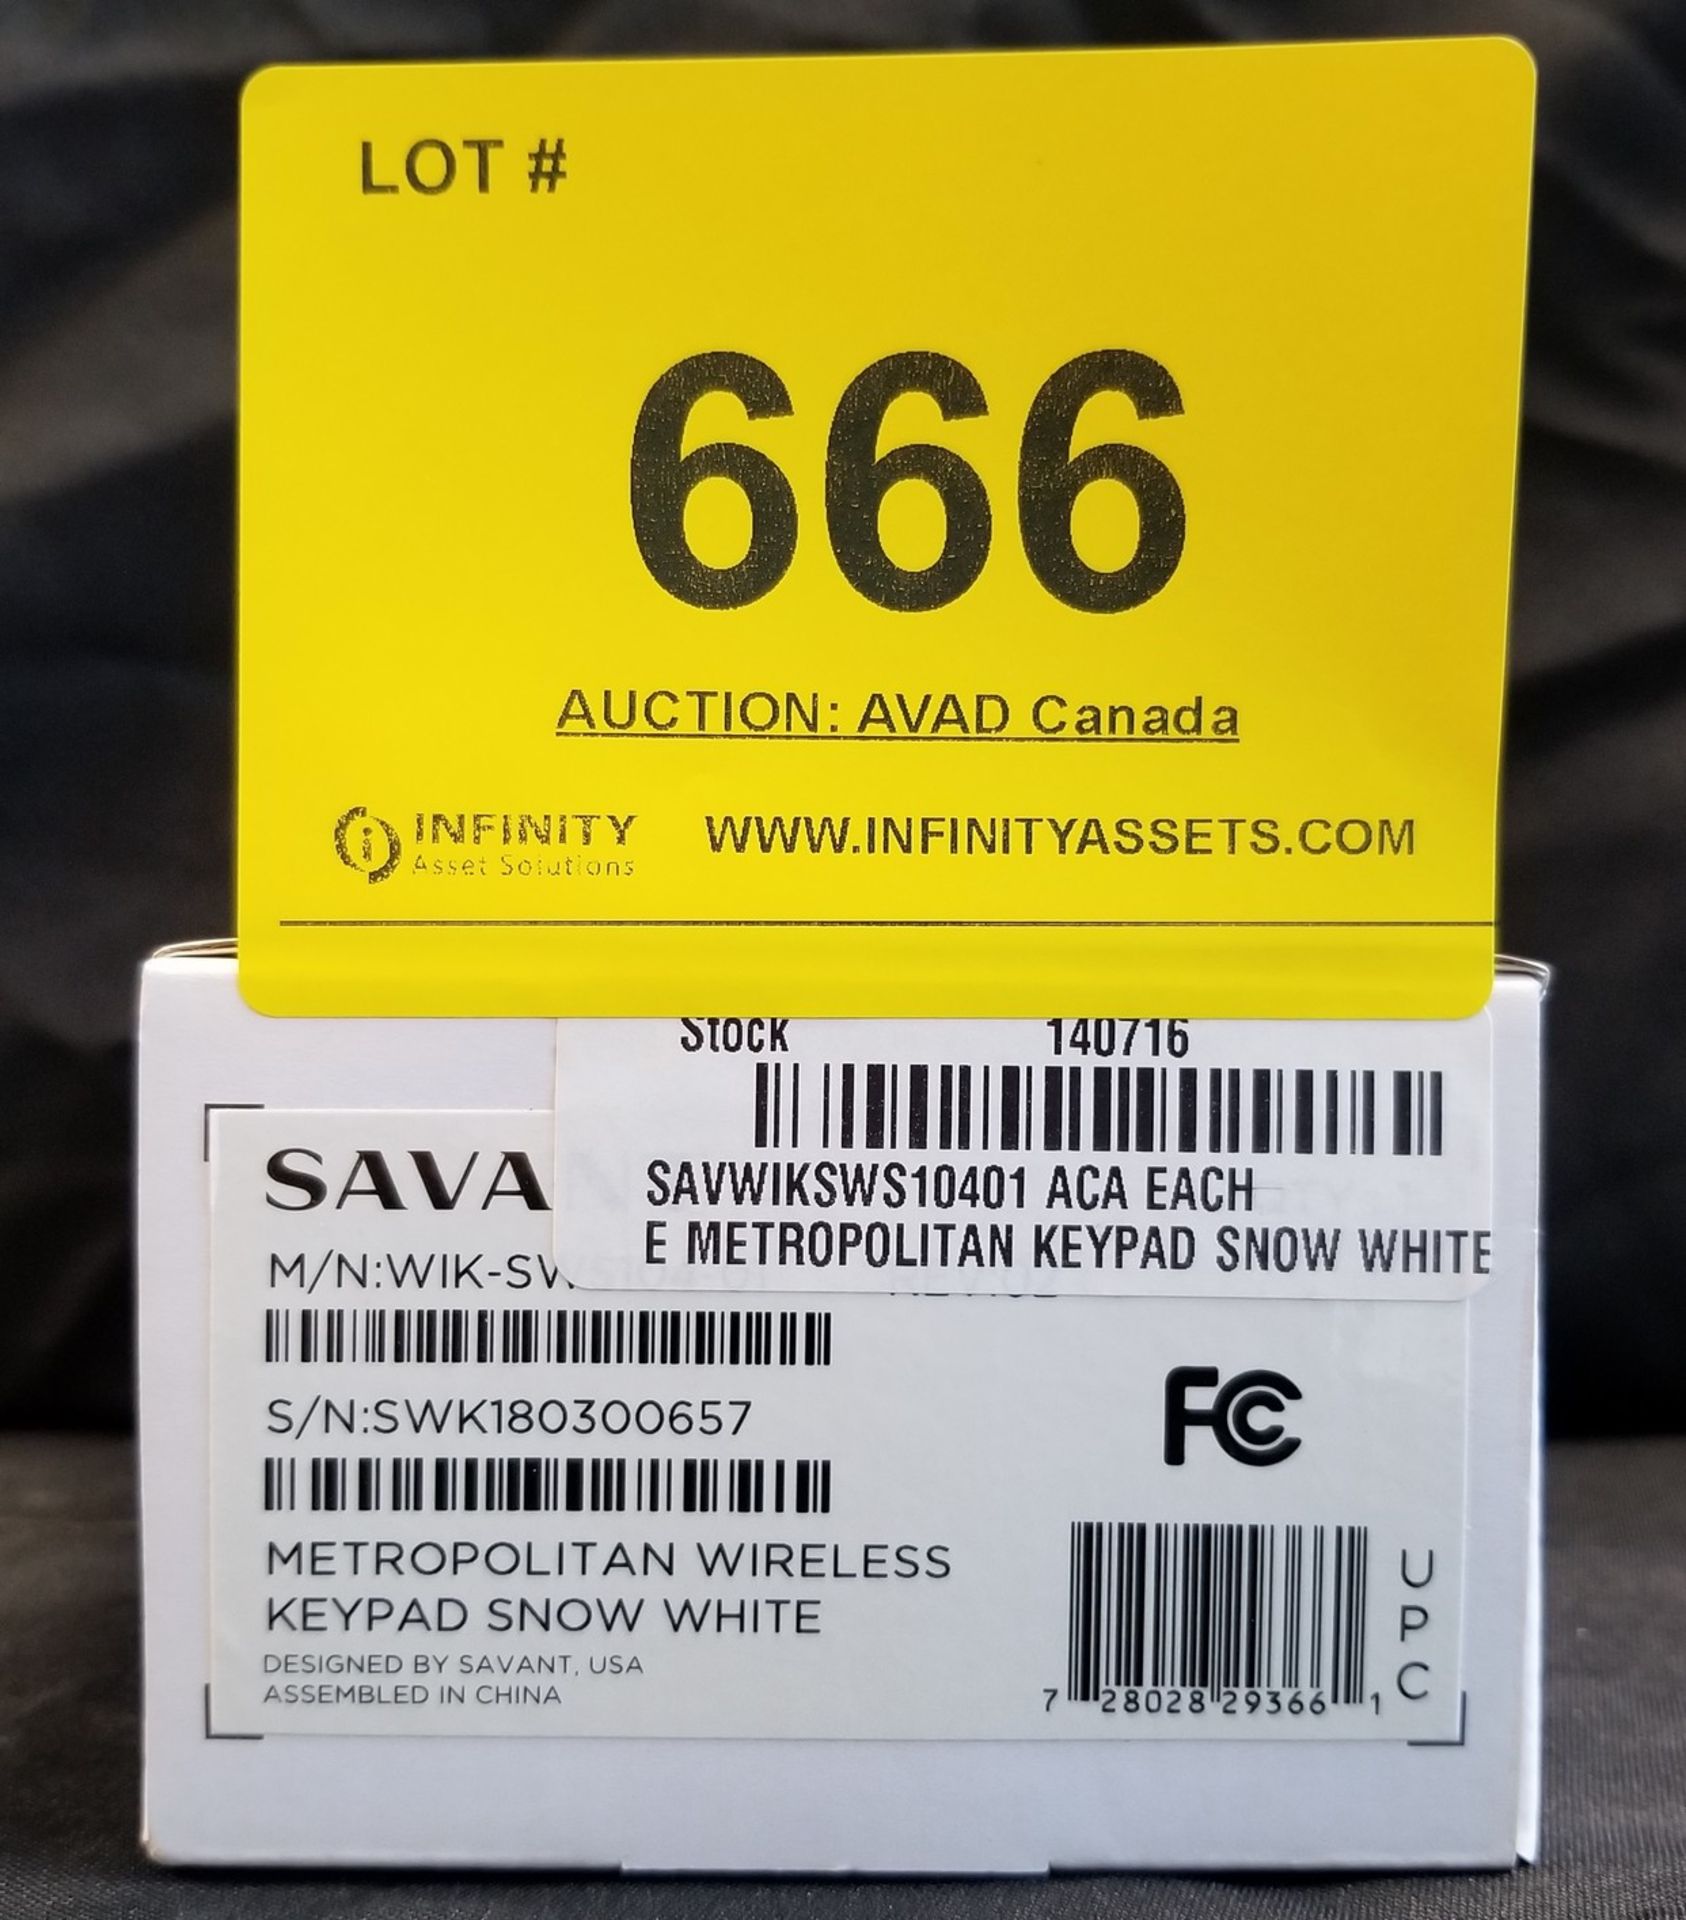 SAVANT,WIK-SWS104-01 METROPOLITAN WIRELESS KEYPAD SNOW WHITE - (BNIB) COST $165